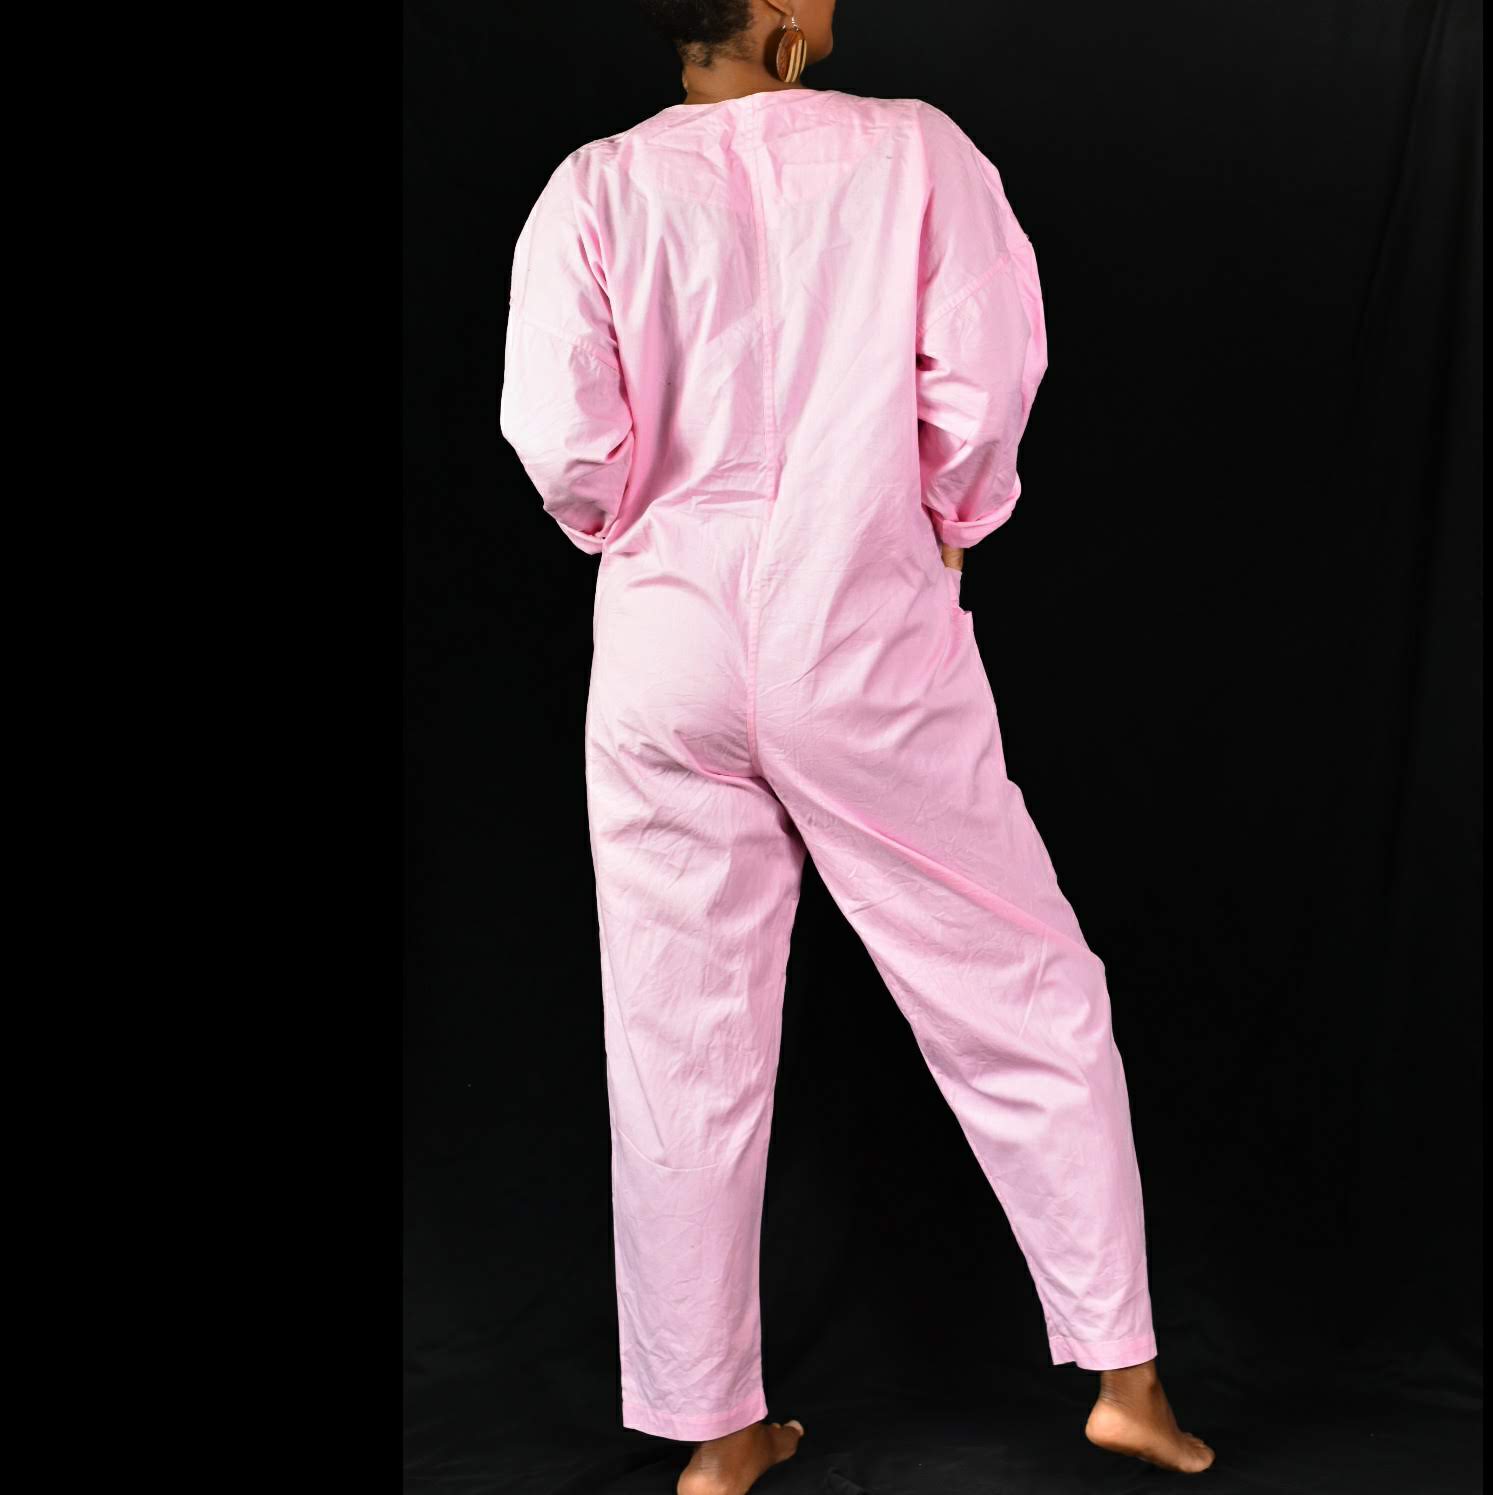 Vintage Katrienne Pink Jumpsuit Size Small